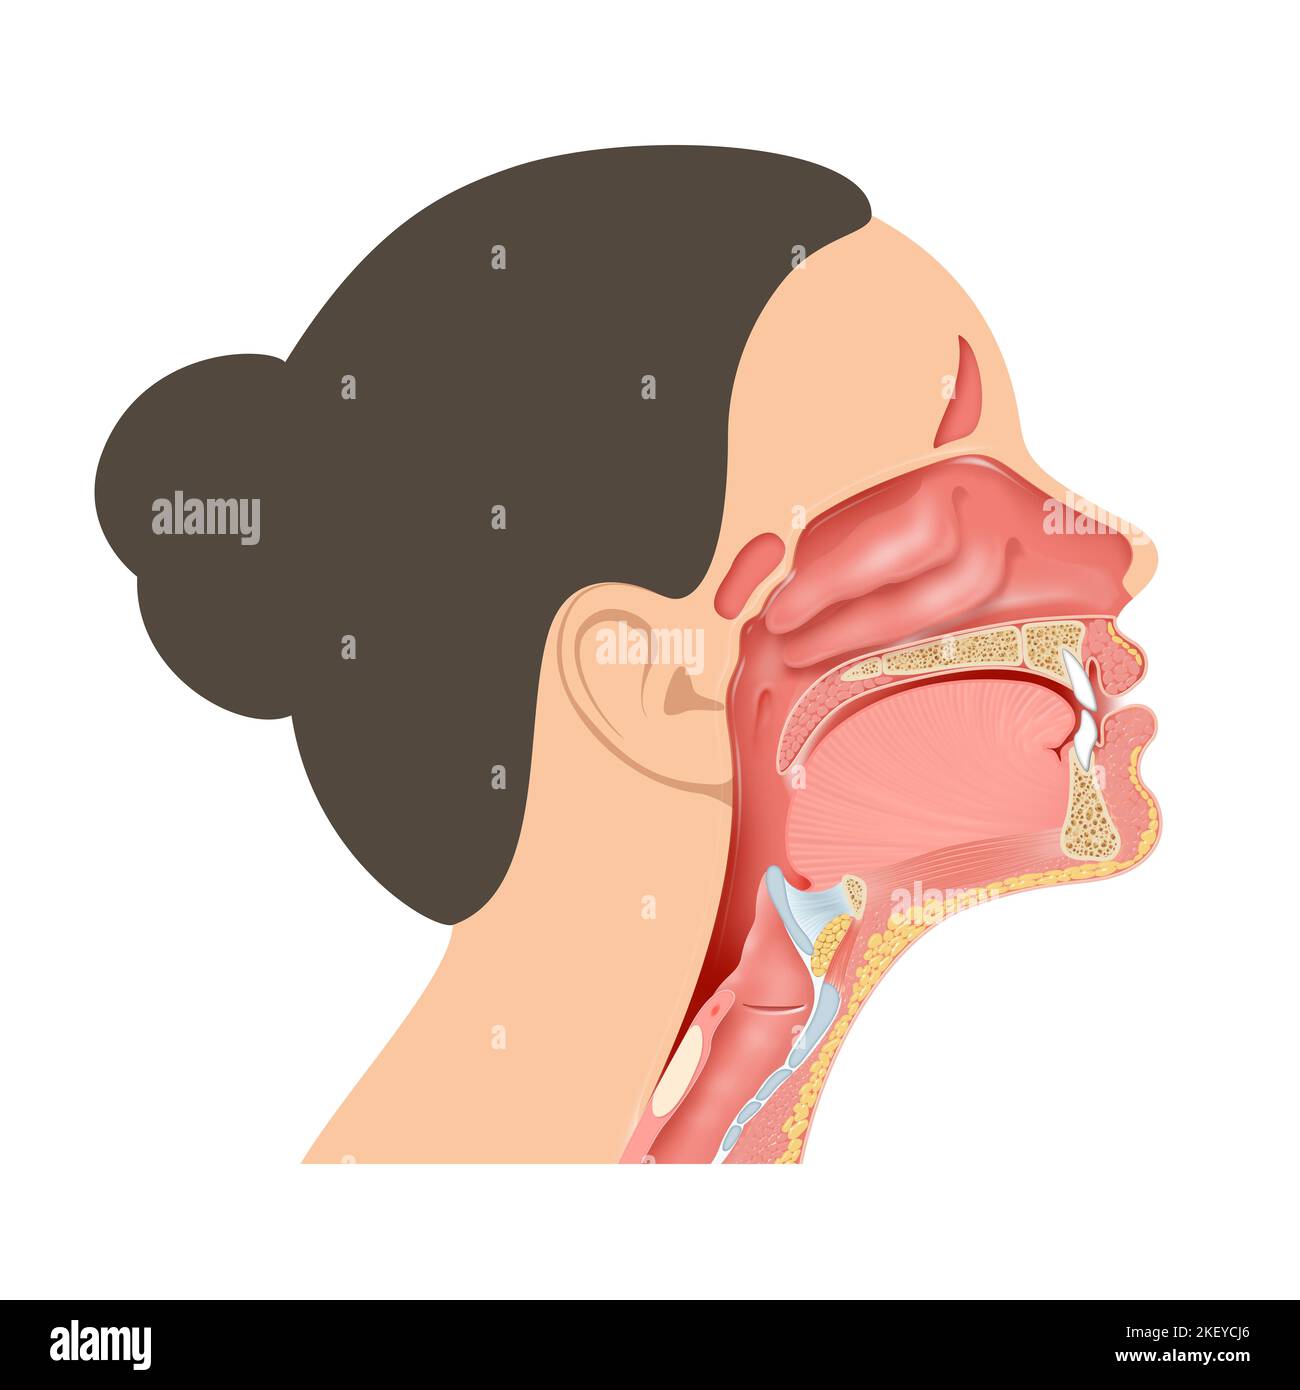 Anatomical structures surrounding the pharynx illustration Stock Photo